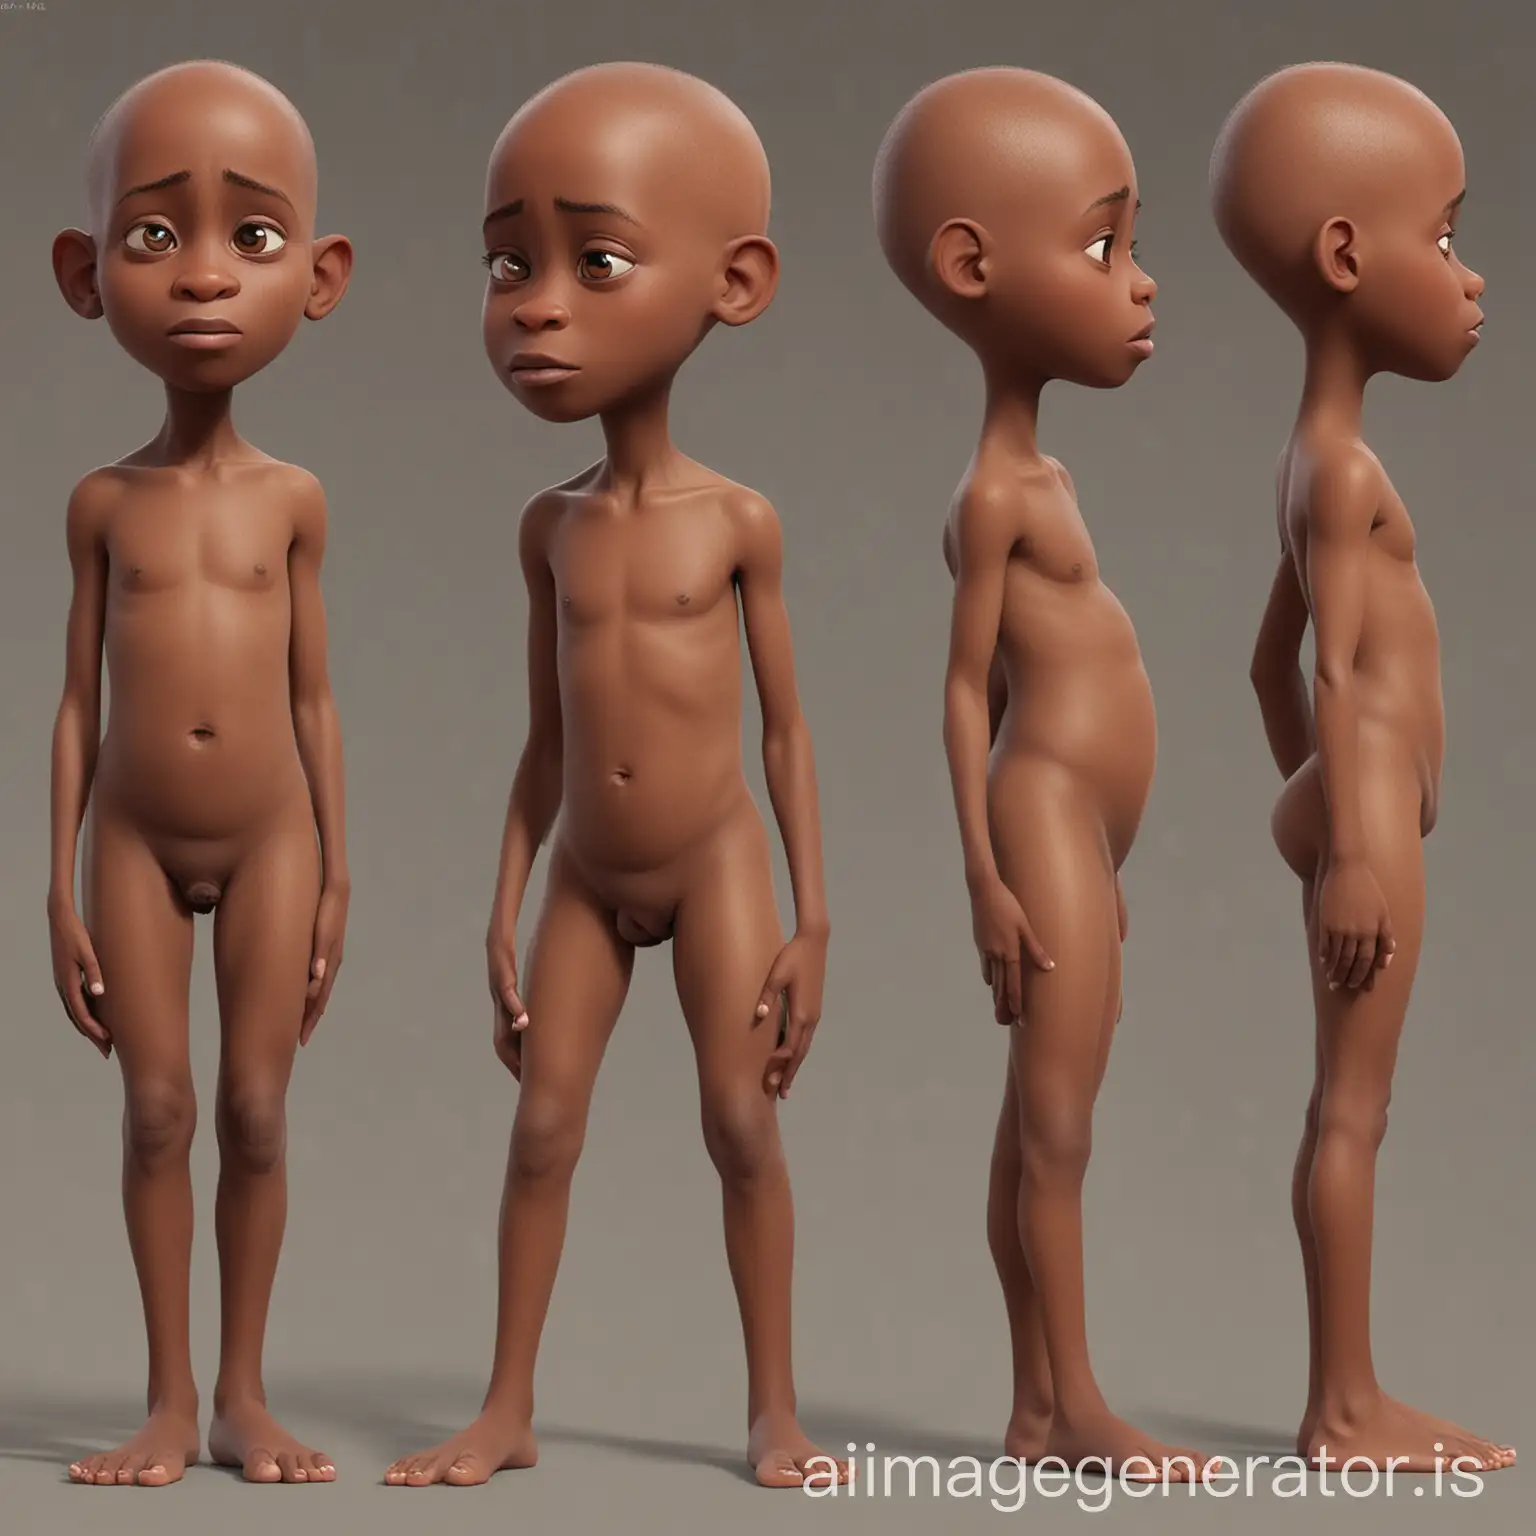 Adorable-9YearOld-African-Boy-Character-Design-Sheet